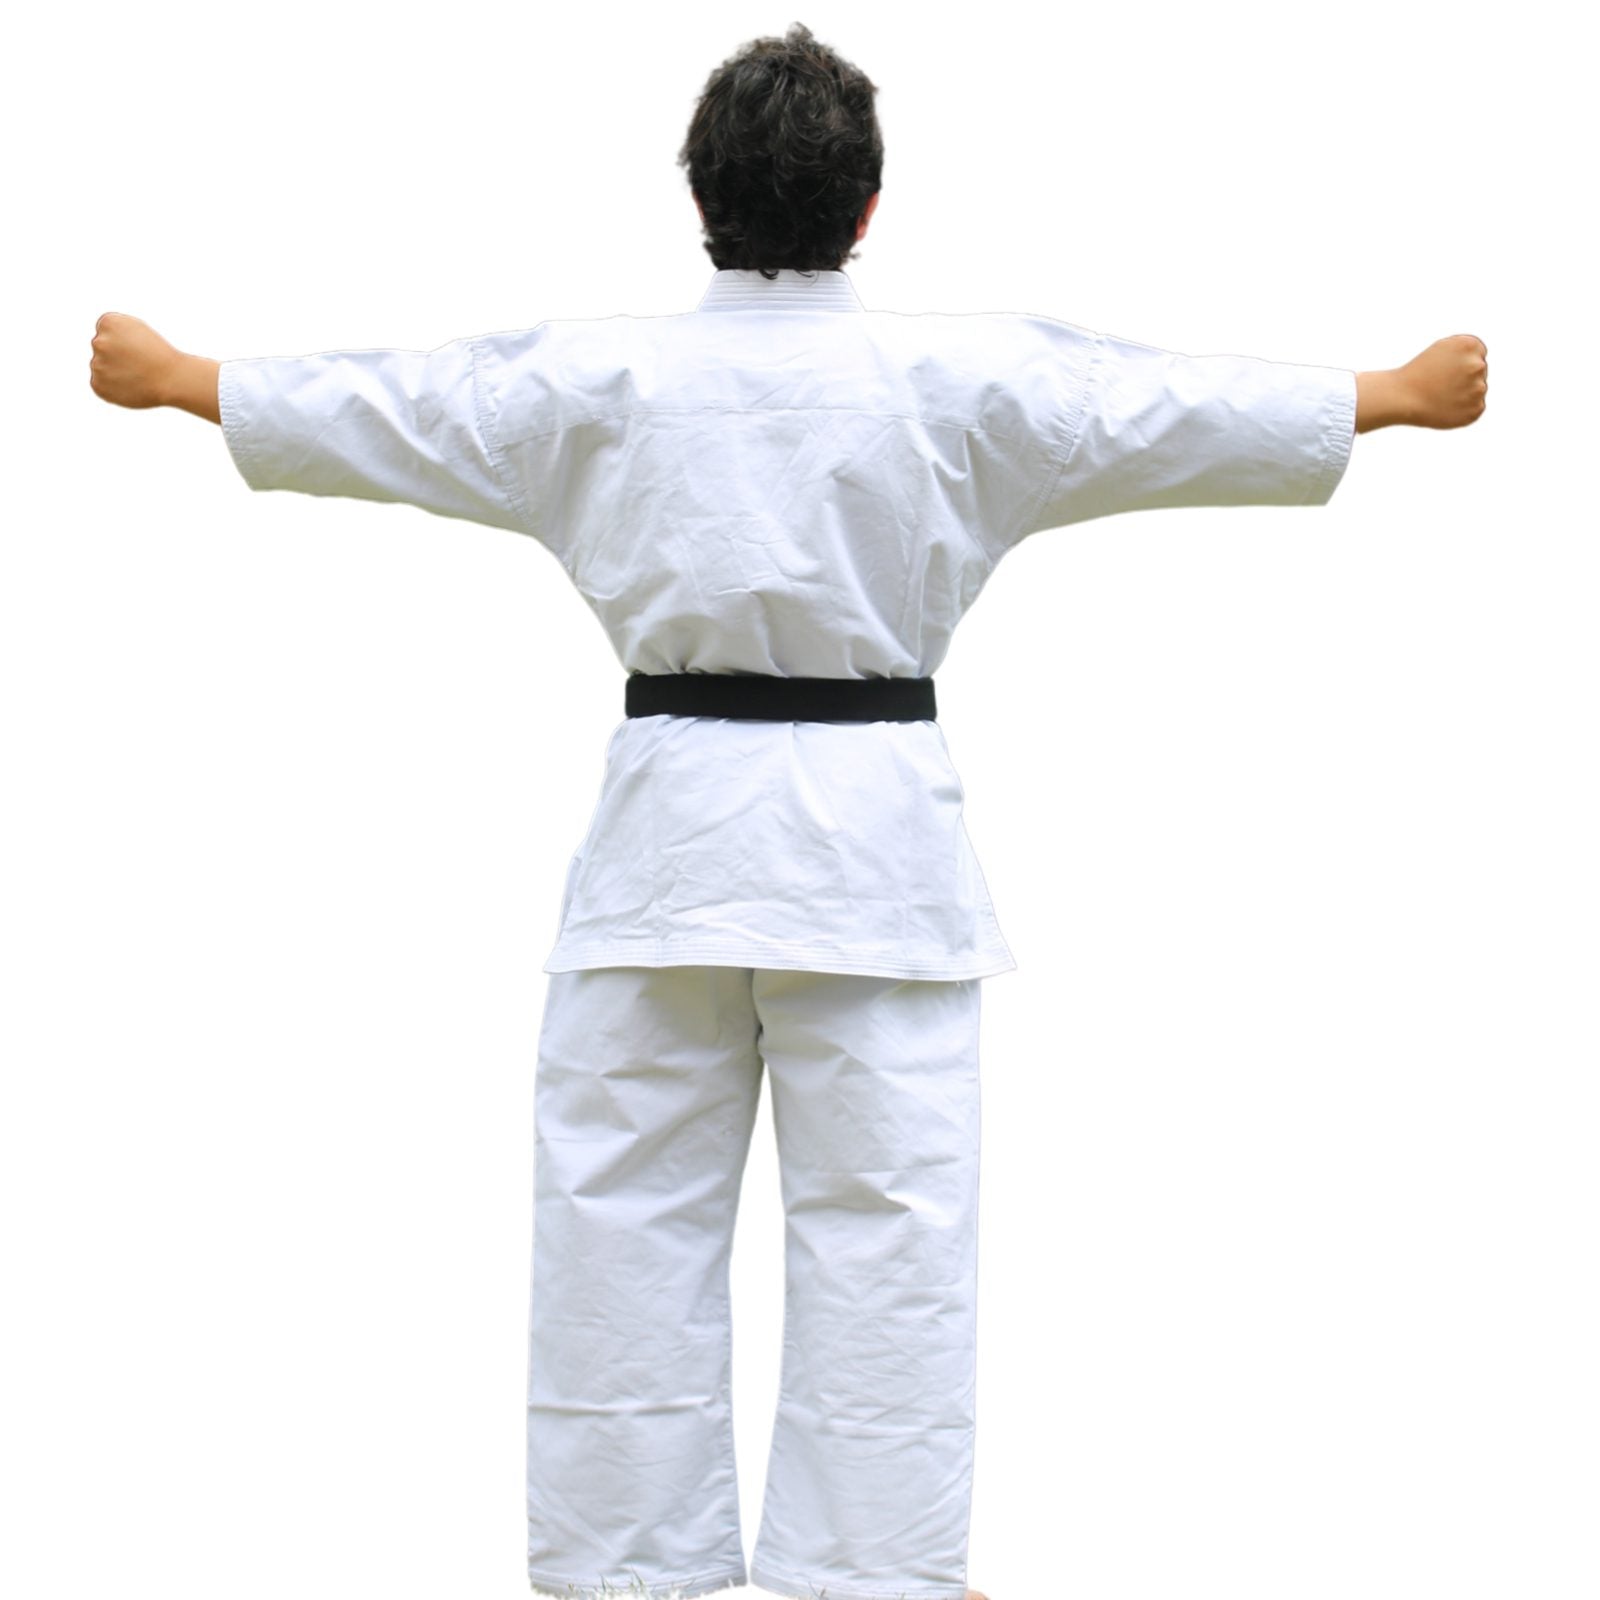 karate-gi-uniform-bleached-plain-cotton